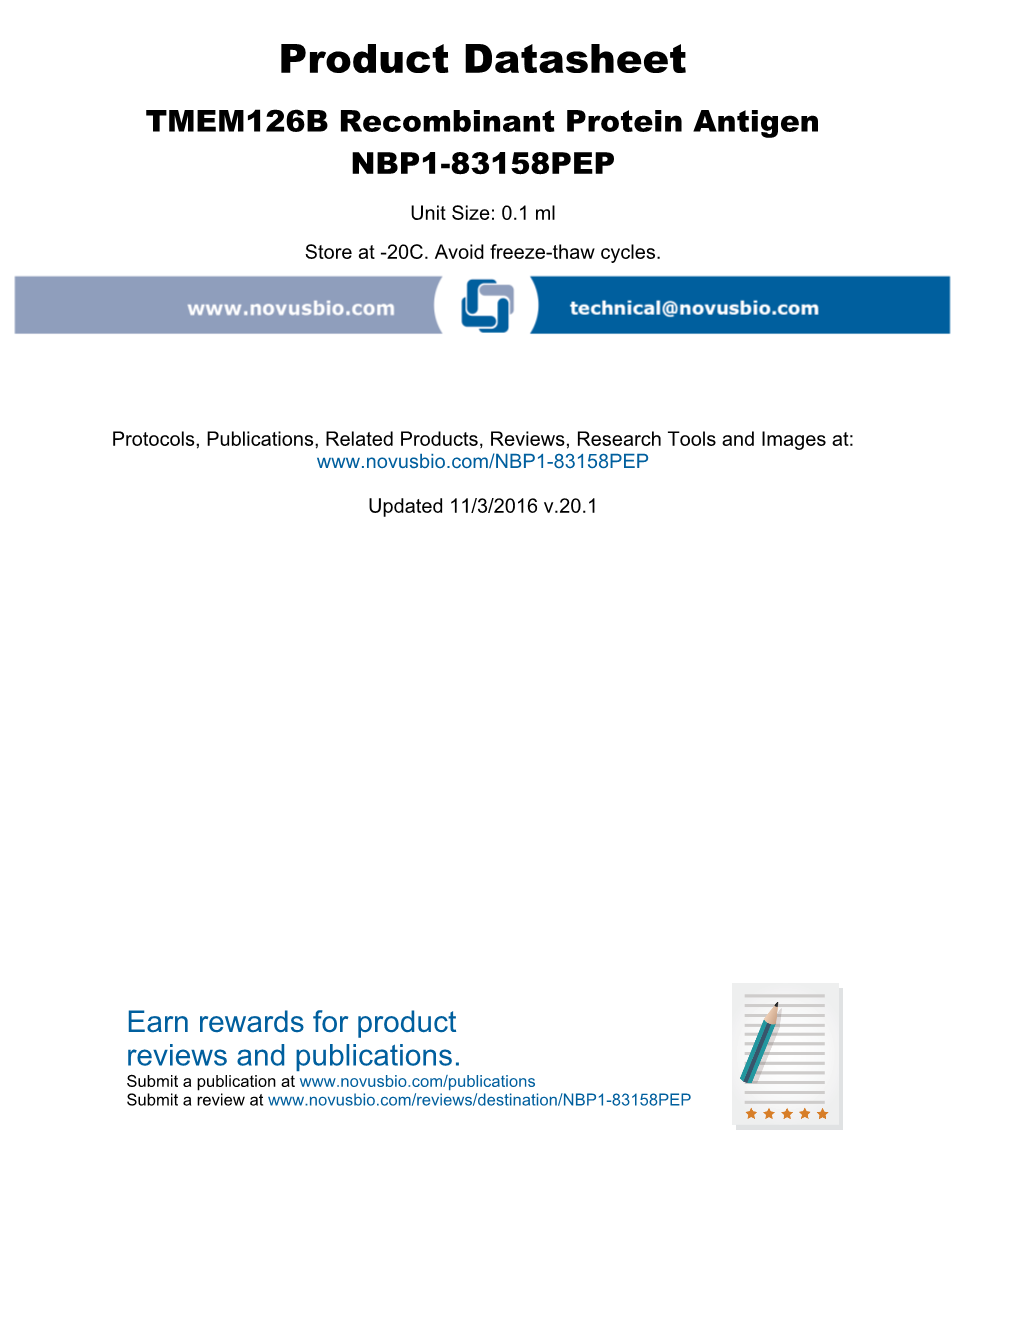 Product Datasheet TMEM126B Recombinant Protein Antigen NBP1